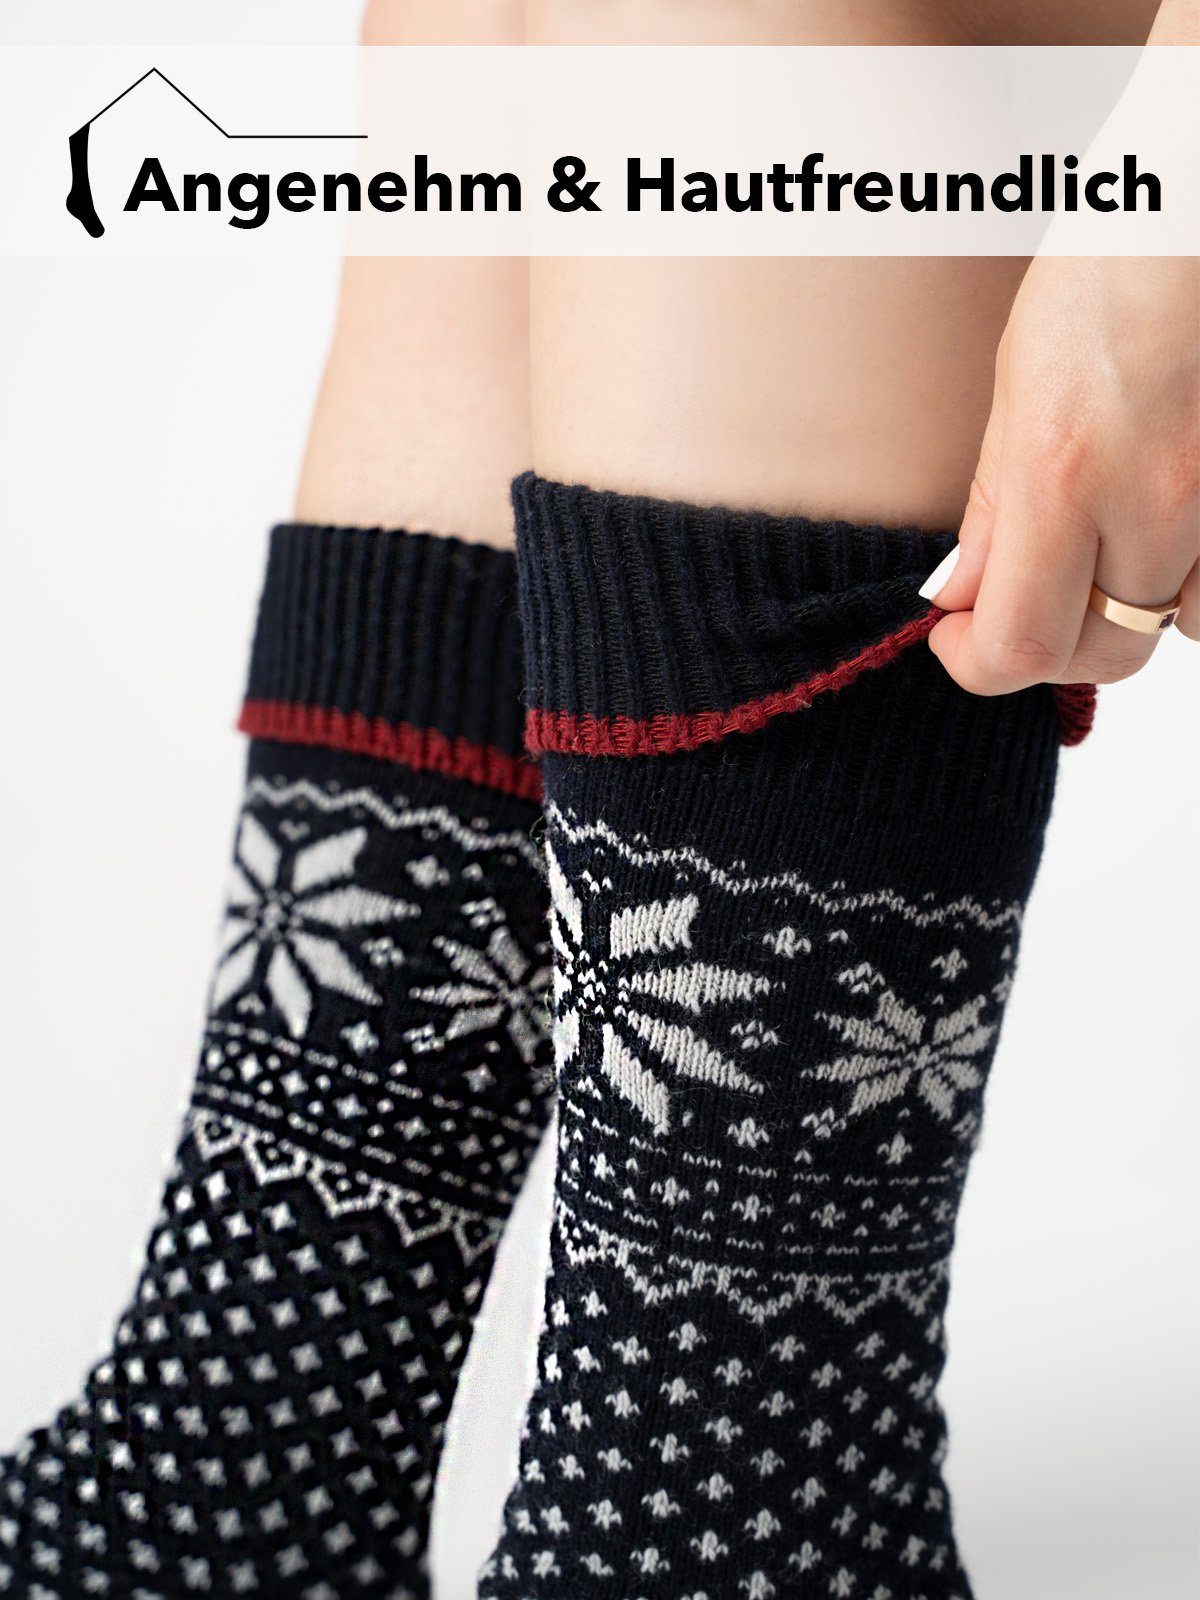 Dicke Hyggelig Grau Socken Hohem Lamm Skandinavische Kuschelsocken Wollanteil Warm Nordic Mit "Norwegen-Lammwolle" Norwegischem Wollsocke Aus In Socken HomeOfSocks Design Wolle 70%